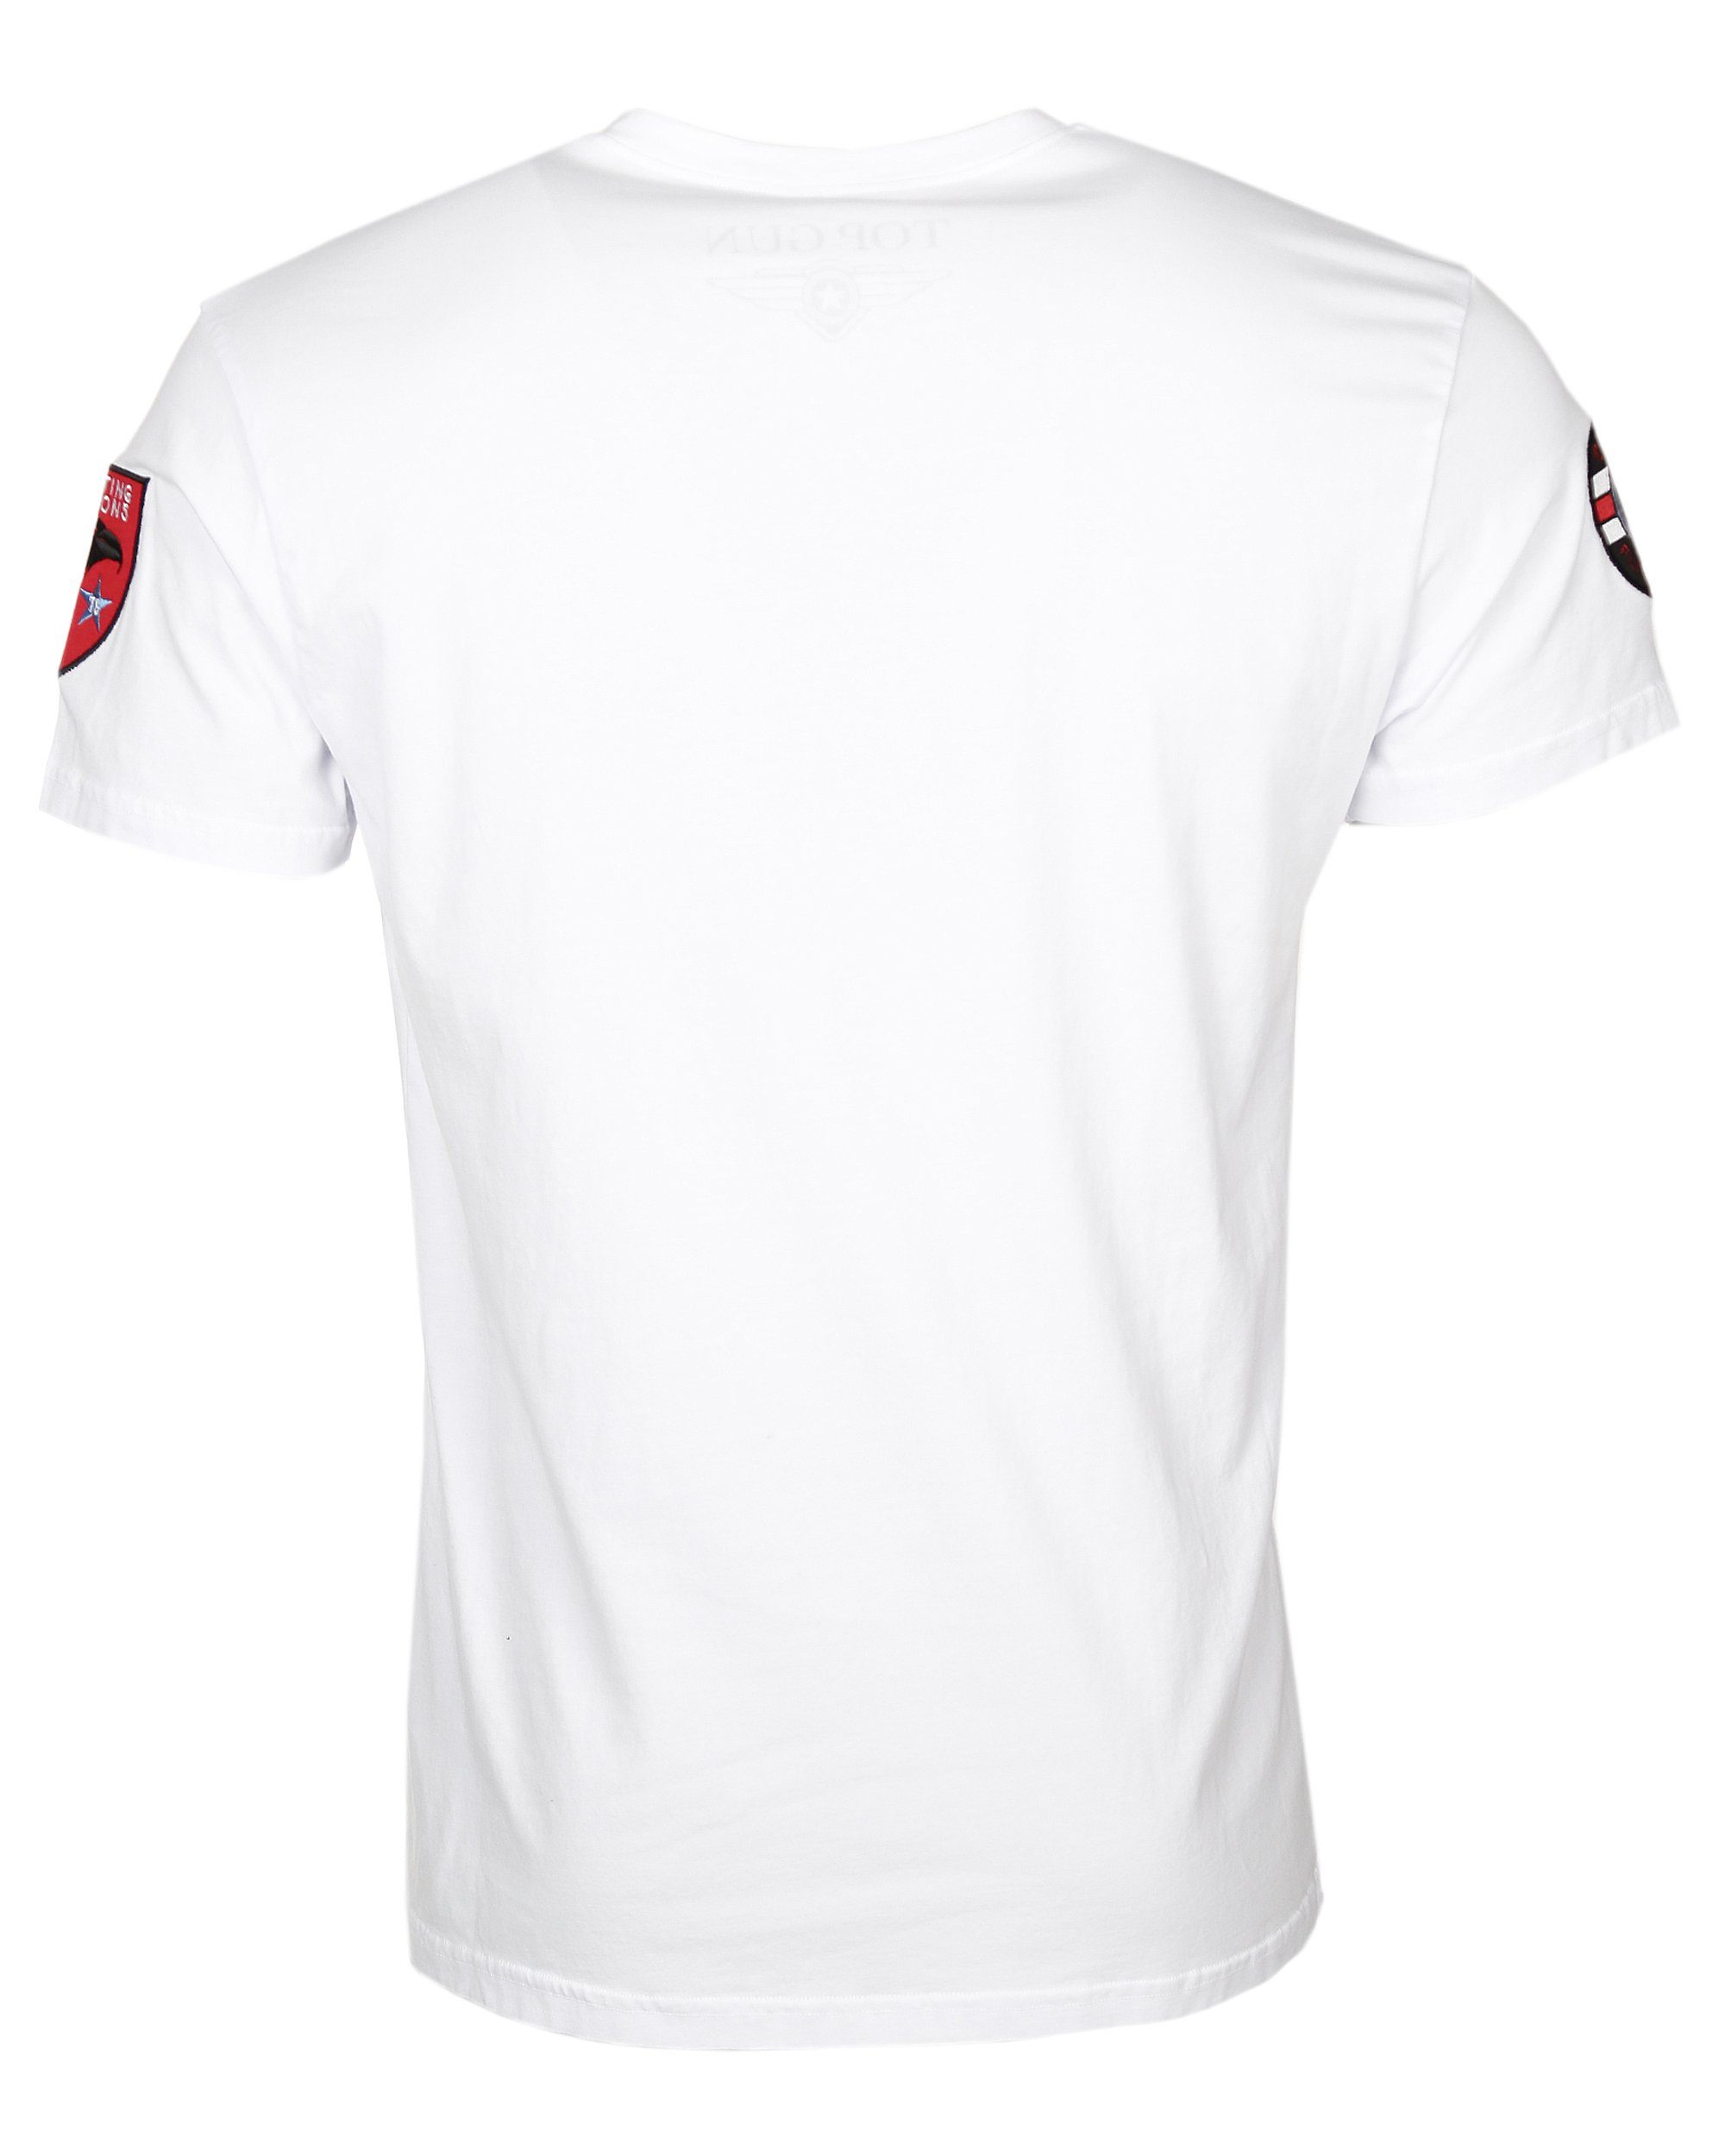 TOP GUN T-Shirt white TG20191004